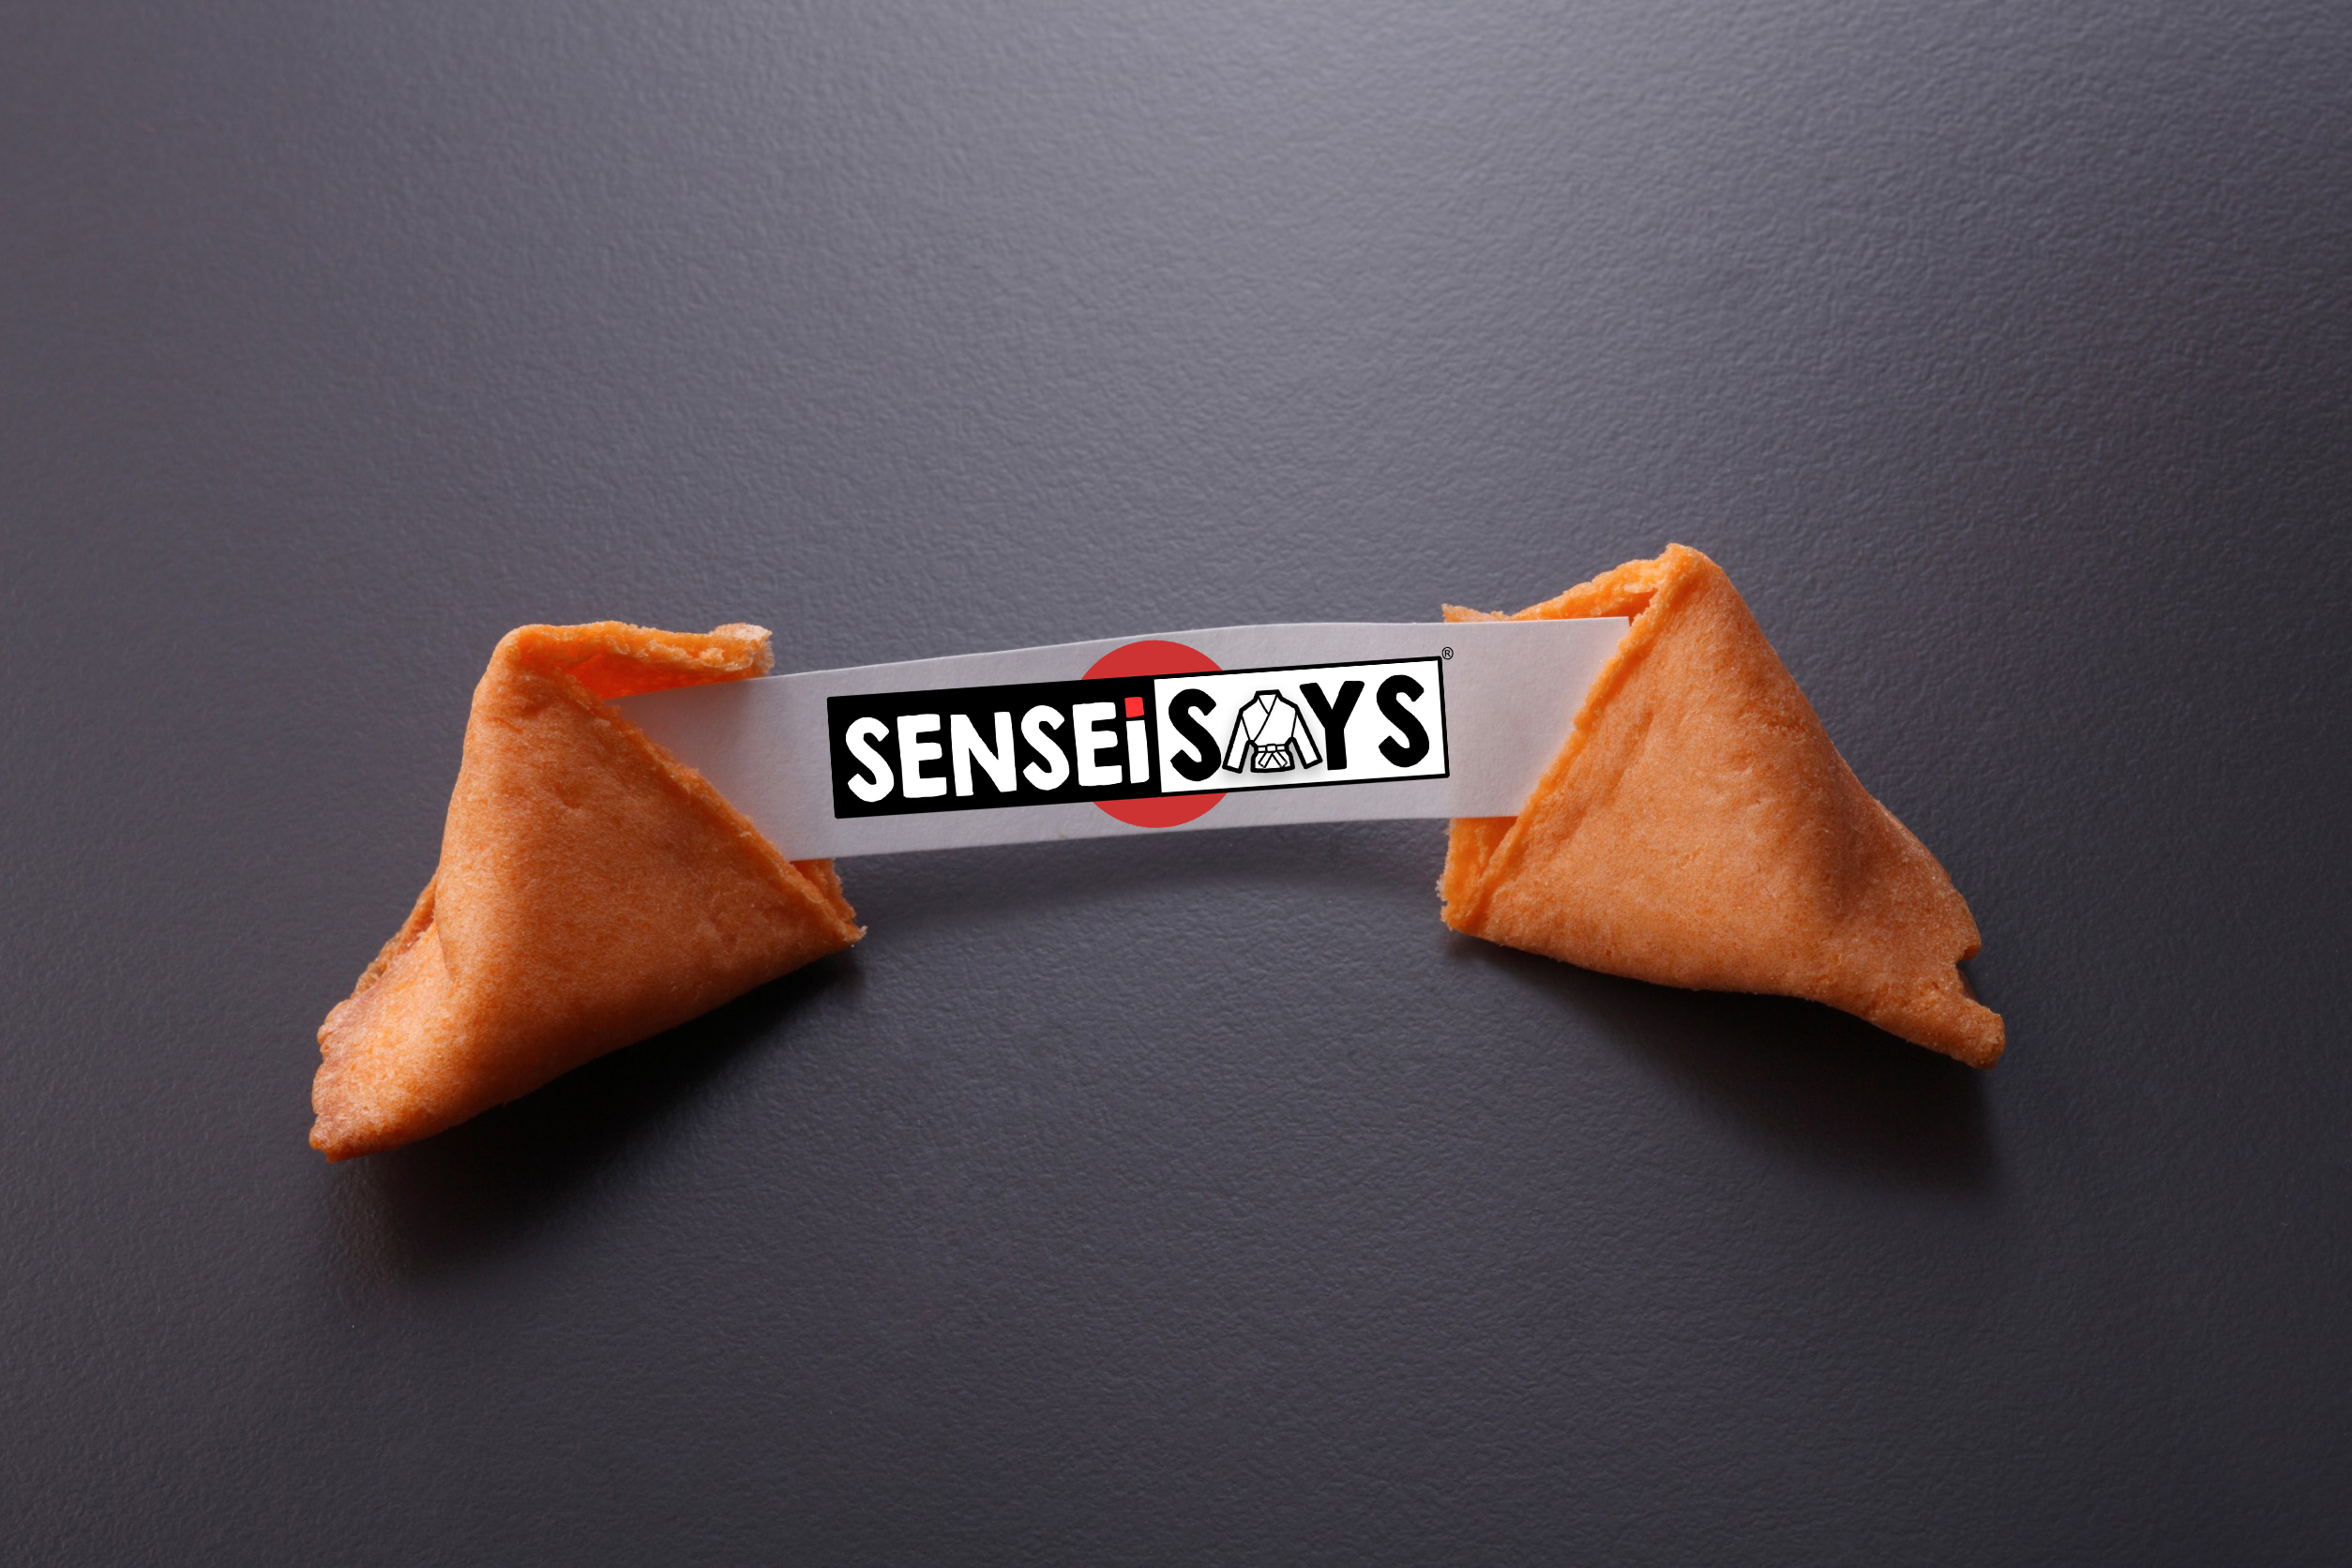 Sensei Says, “Common Sense is making a comeback.”